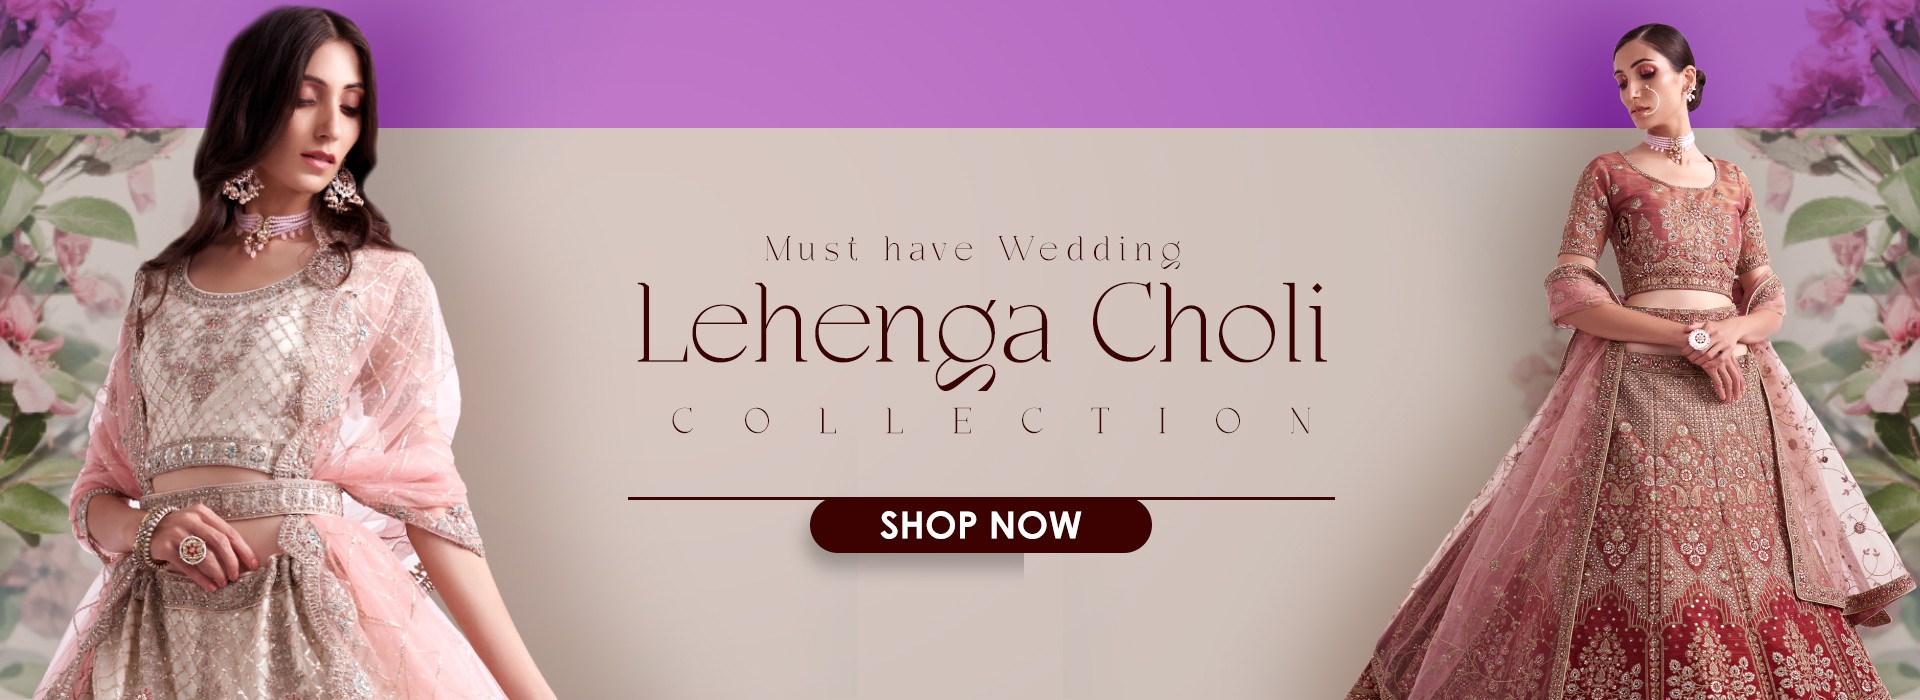 Wedding Lehngha Choli